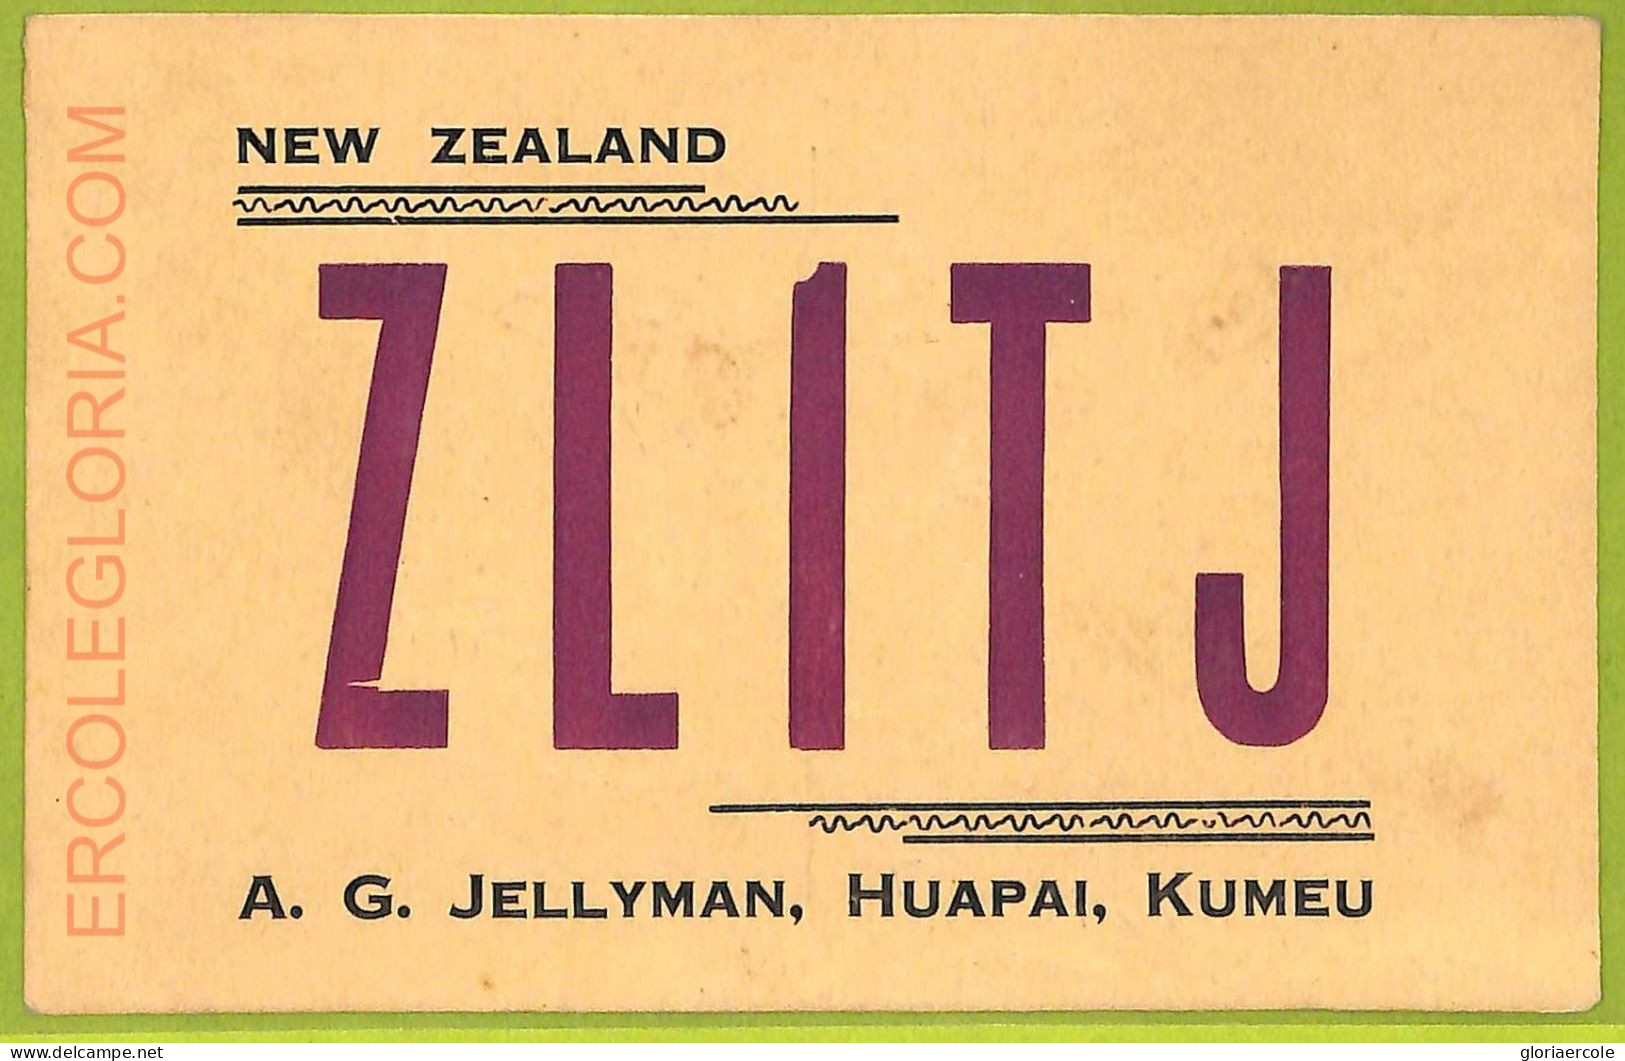 Ae9199 - NEW ZEALAND - RADIO CARD - Huapai - 1950's - Radio